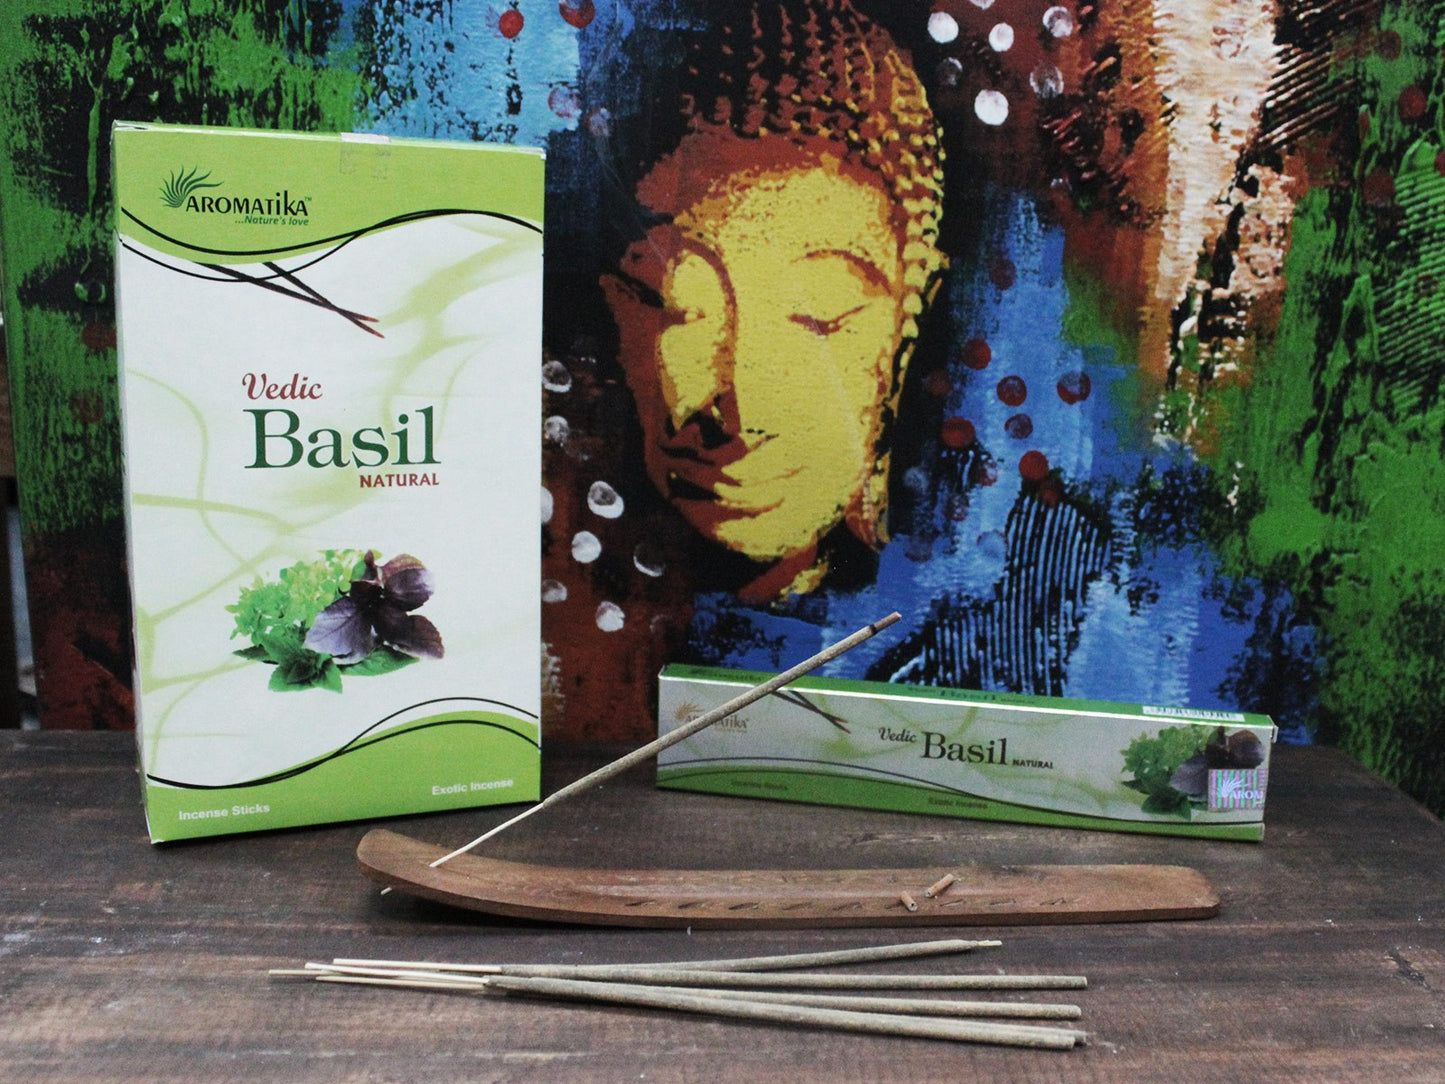 Vedic -Incense Sticks - Basil